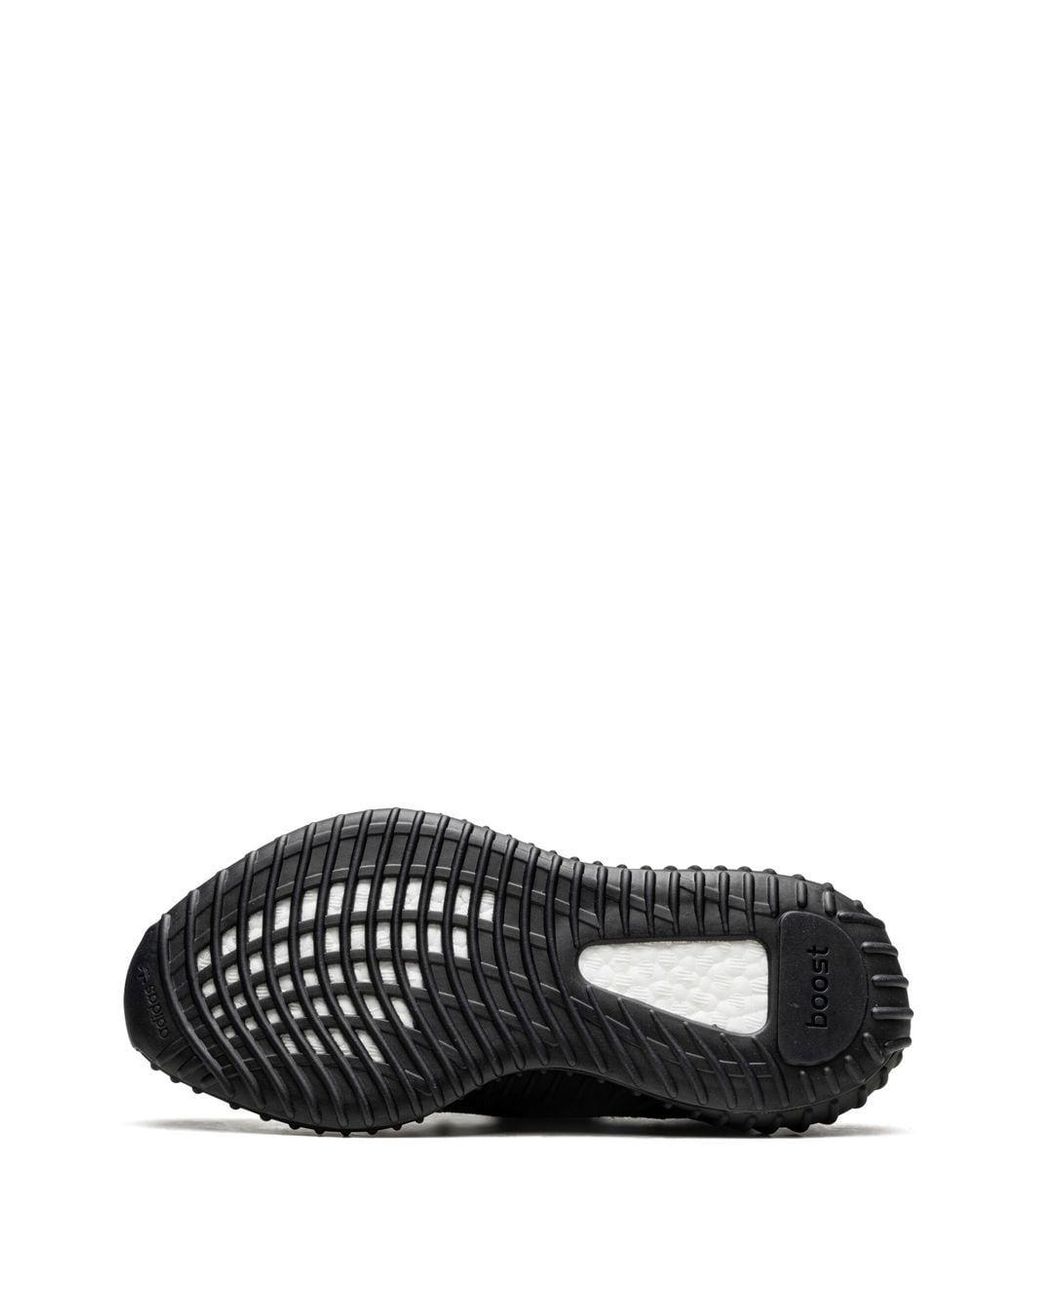 Yeezy Boost 350 V2 'Ash Stone' Sneakers | Grey | Men's Size 14.5